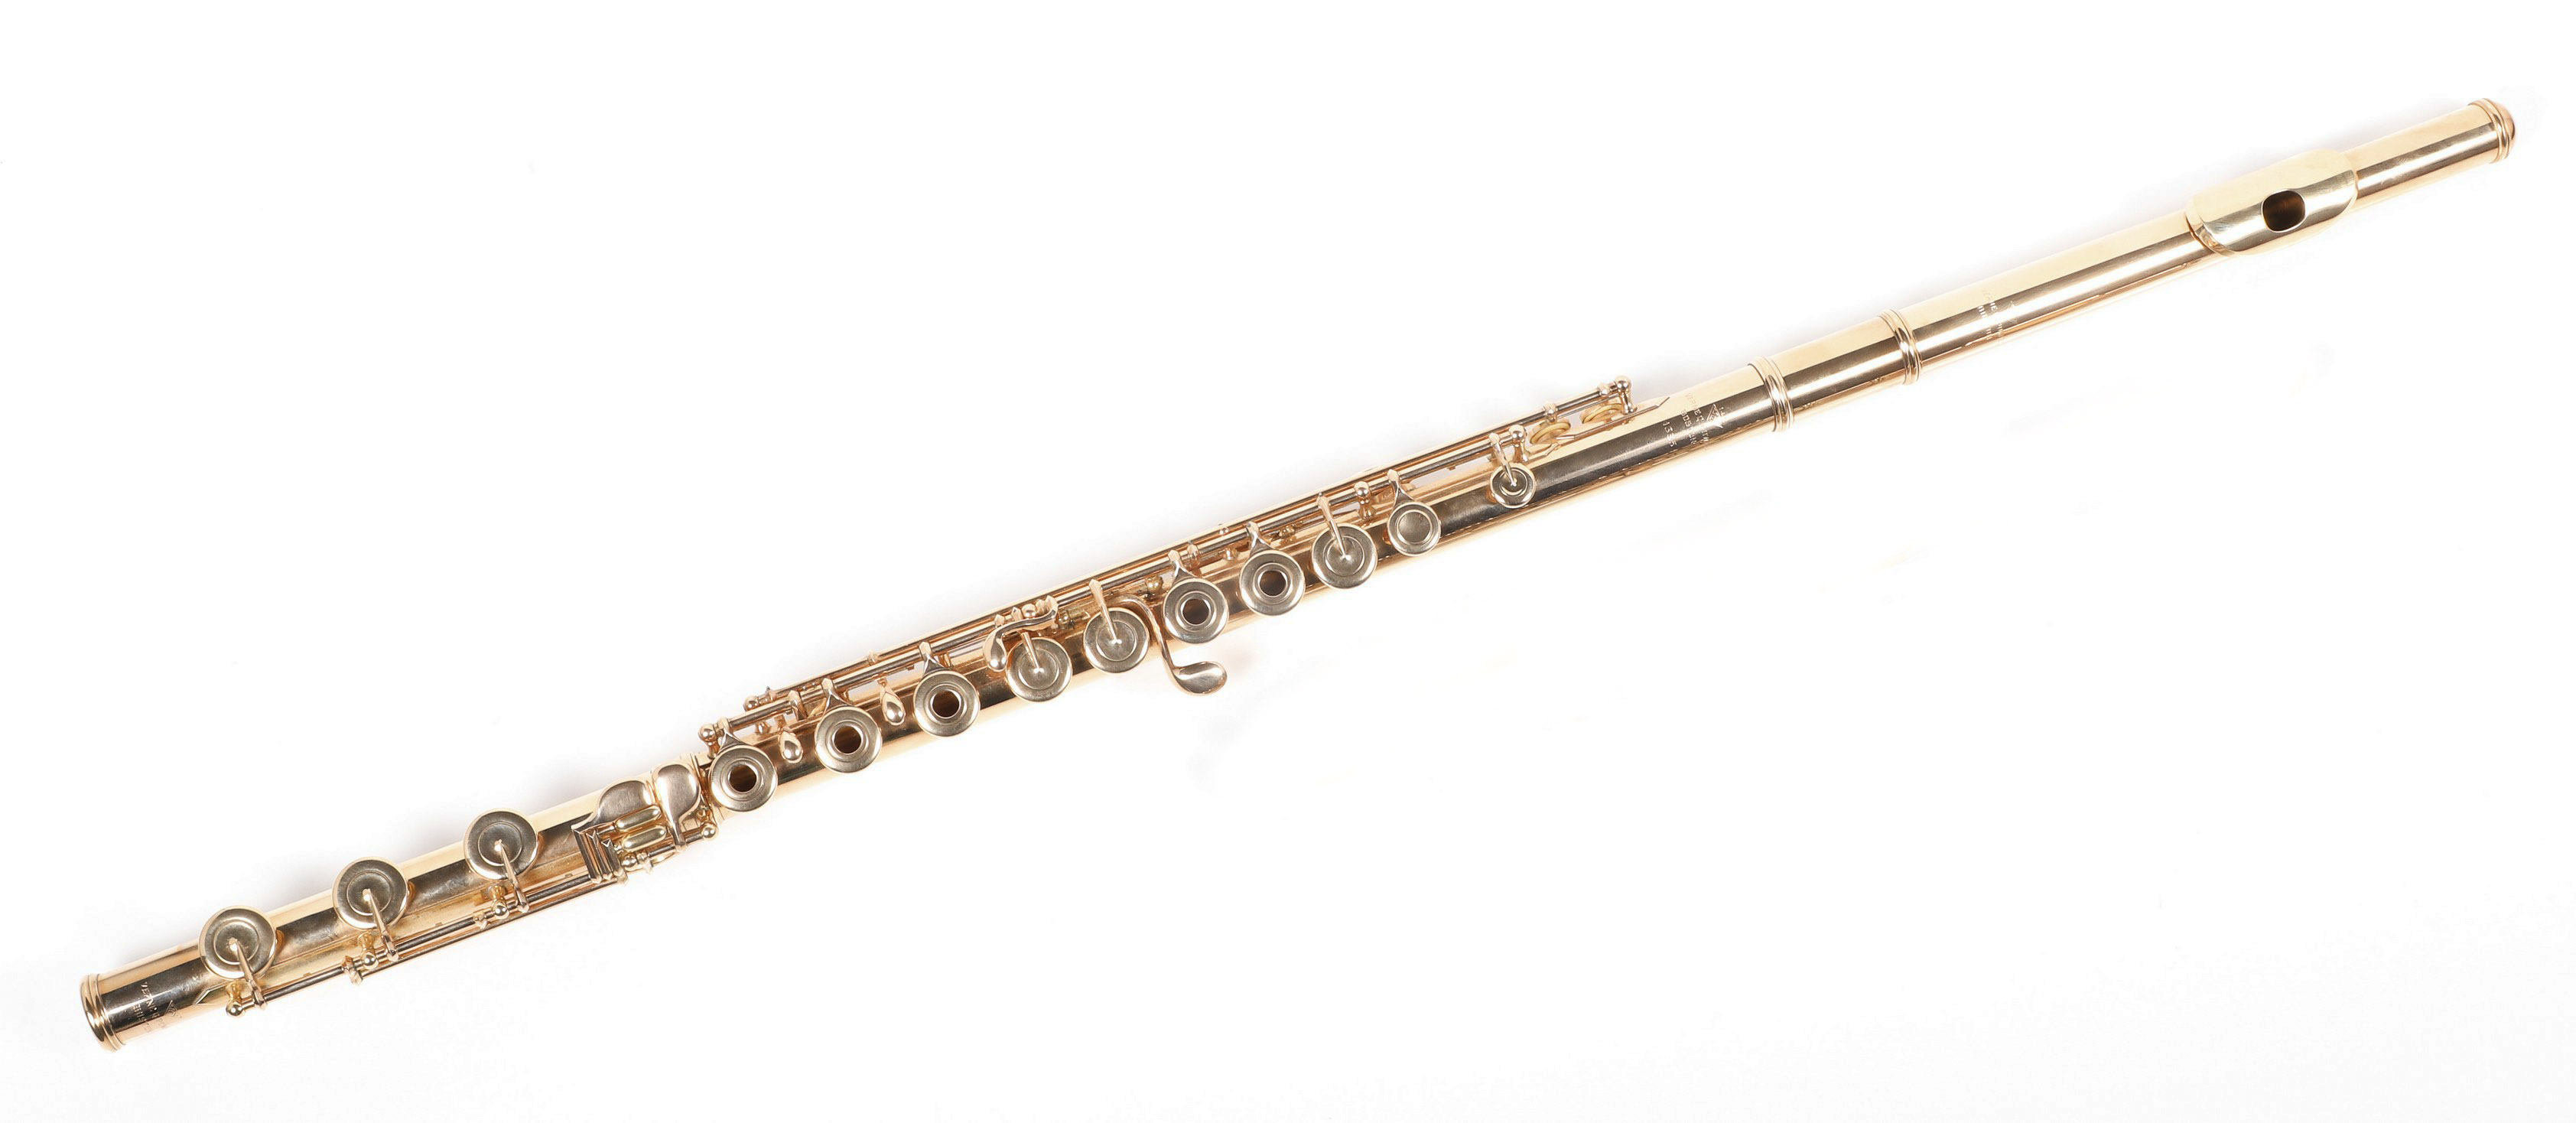 Verne Q Powell 14K gold C flute, soldered